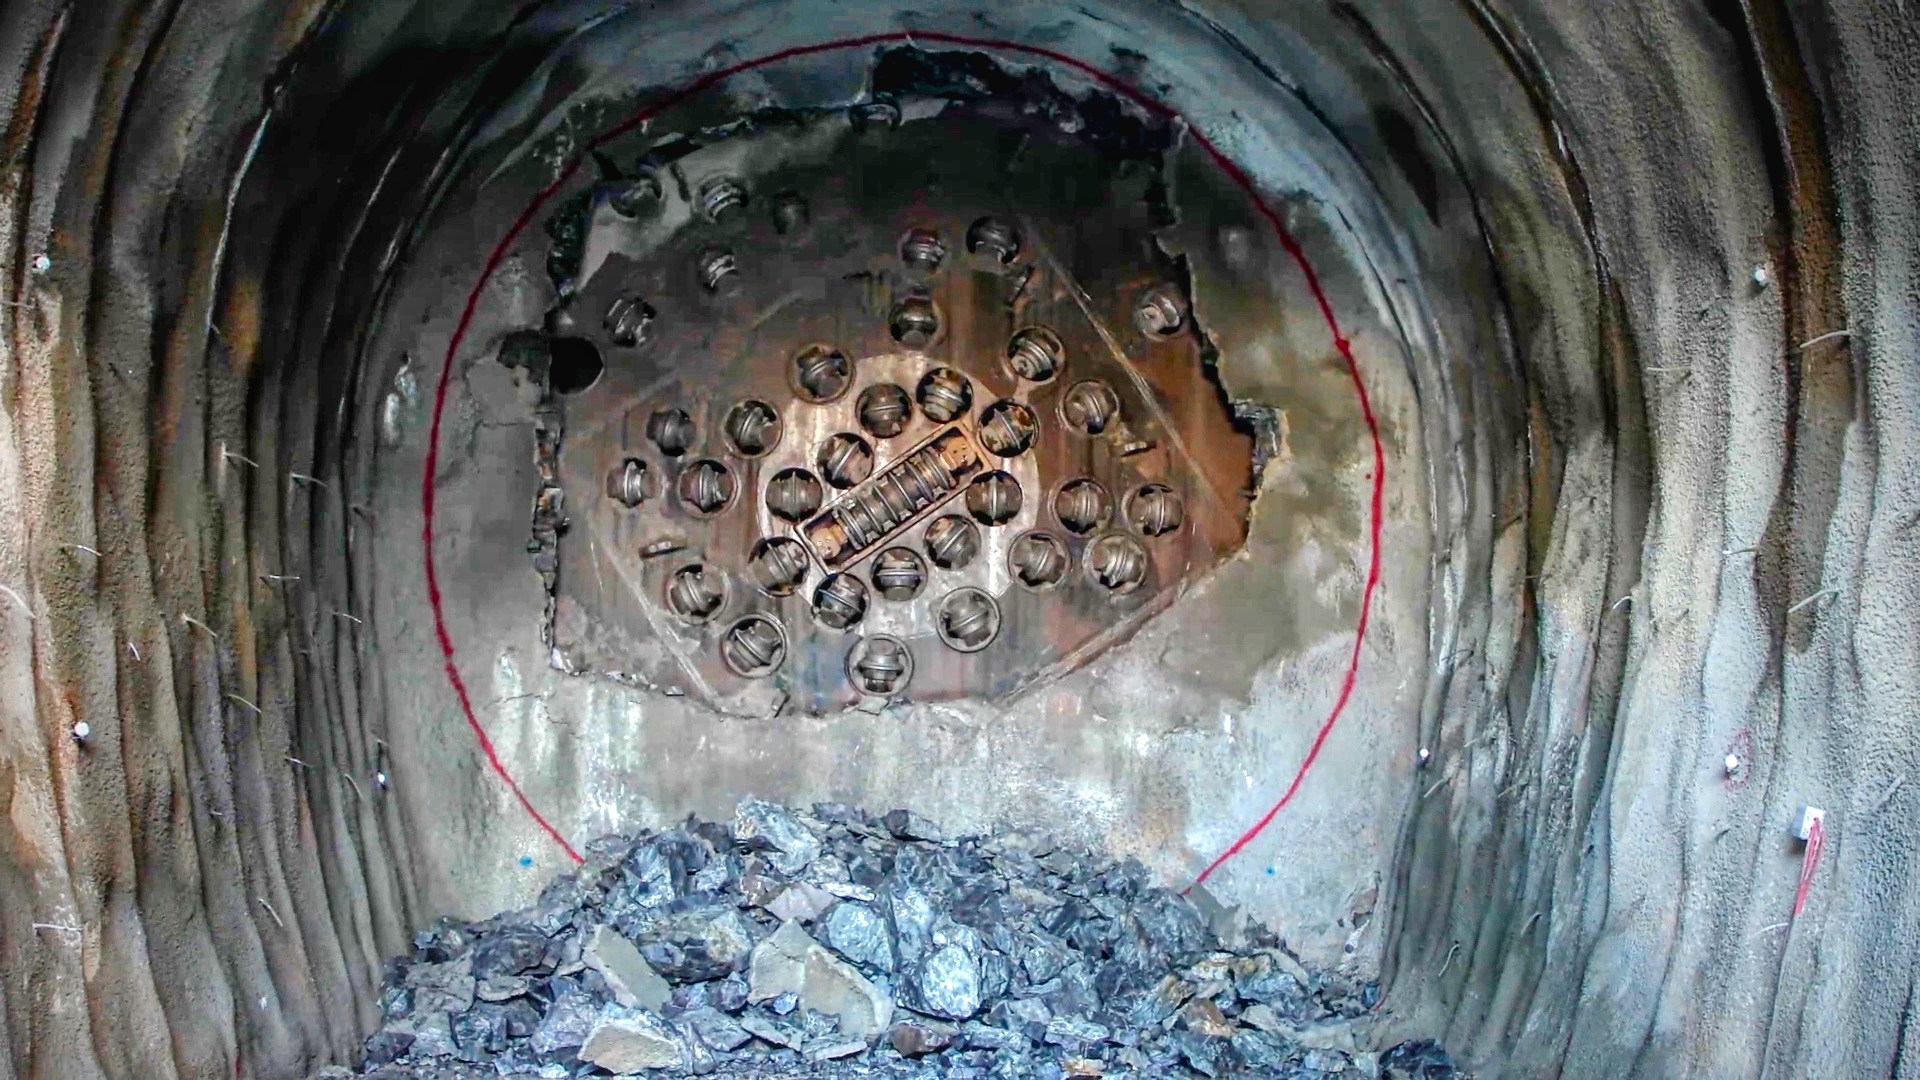 TBM(Tunnel Boring Machine)의 핵심부분인 커터헤드에 장착된 수십 개의 디스크커터가 터널을 뚫고 나오는 모습